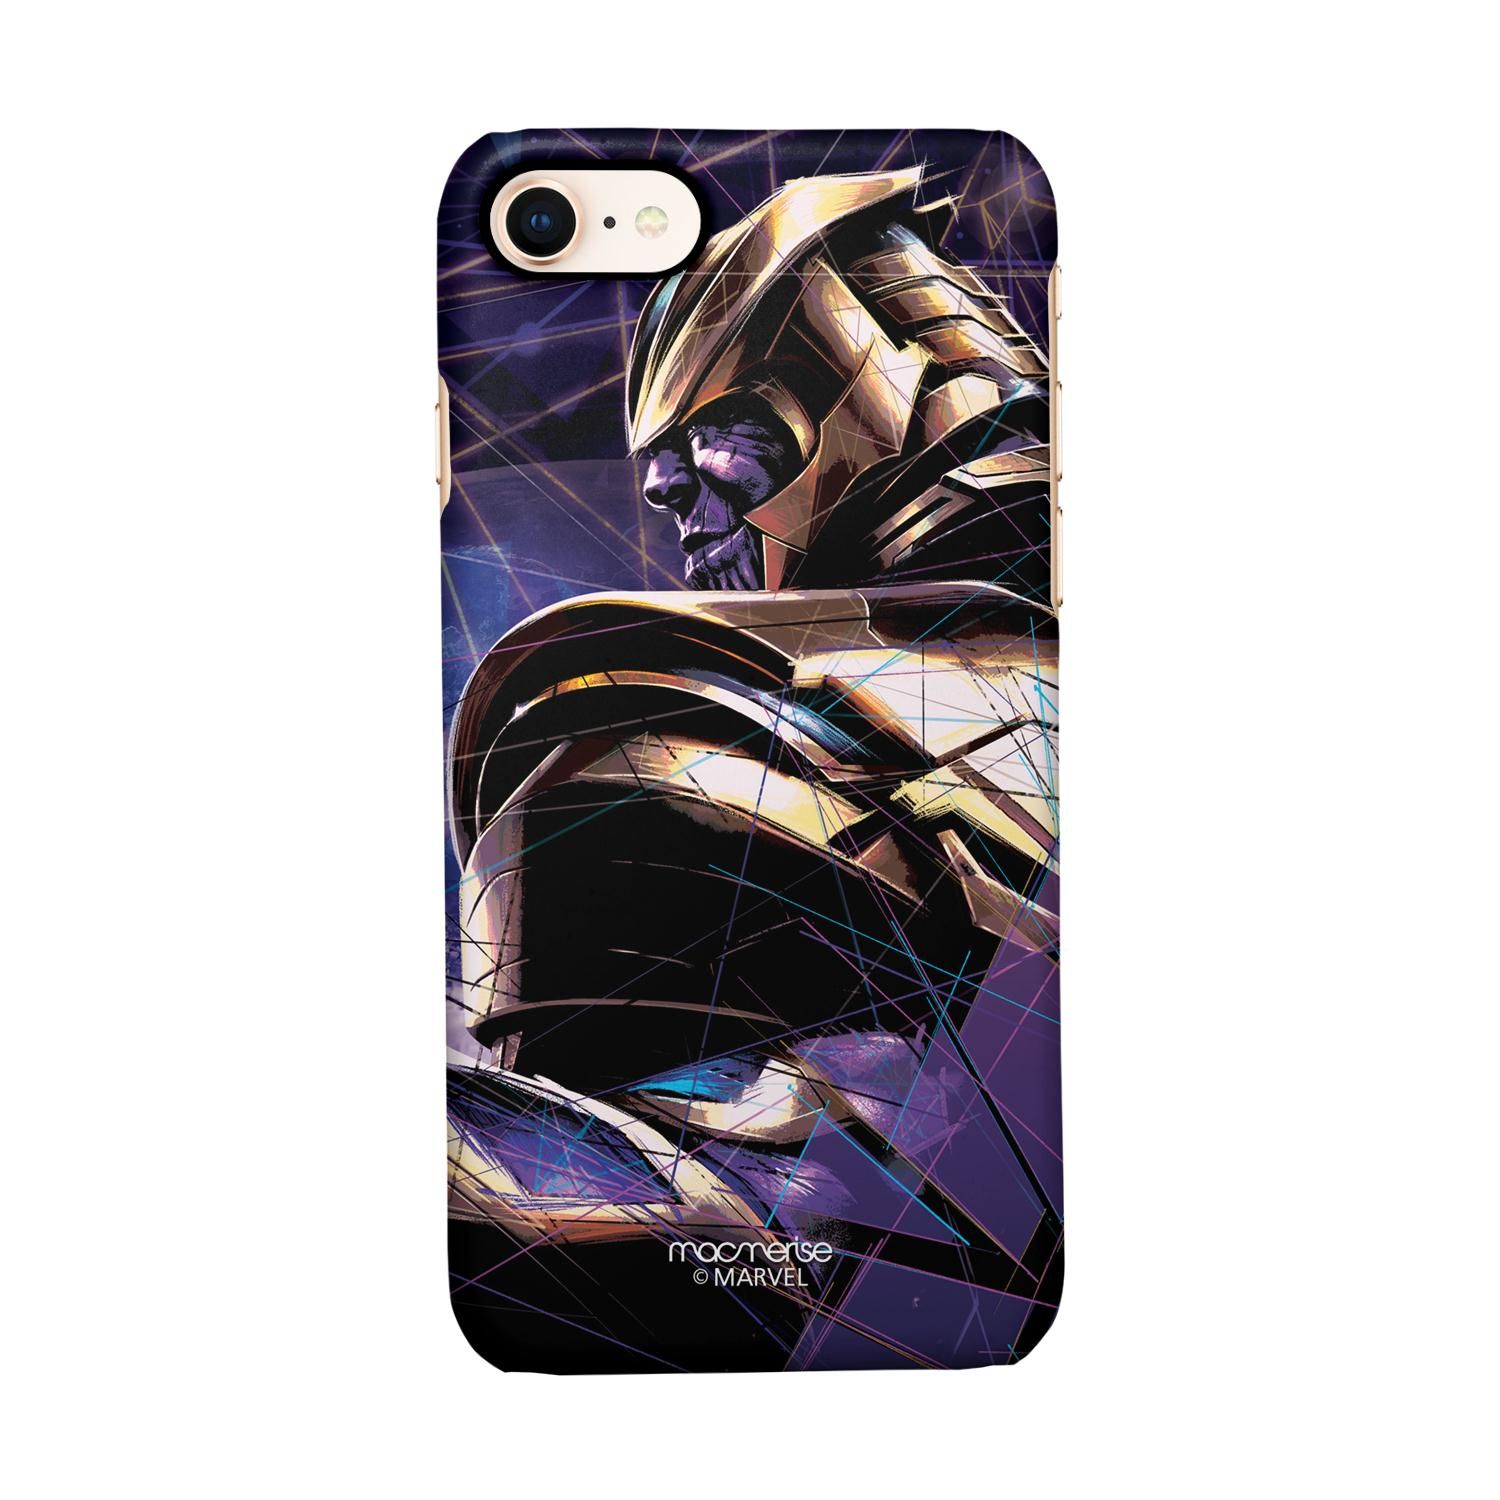 Buy Thanos on Edge - Sleek Phone Case for iPhone 8 Online